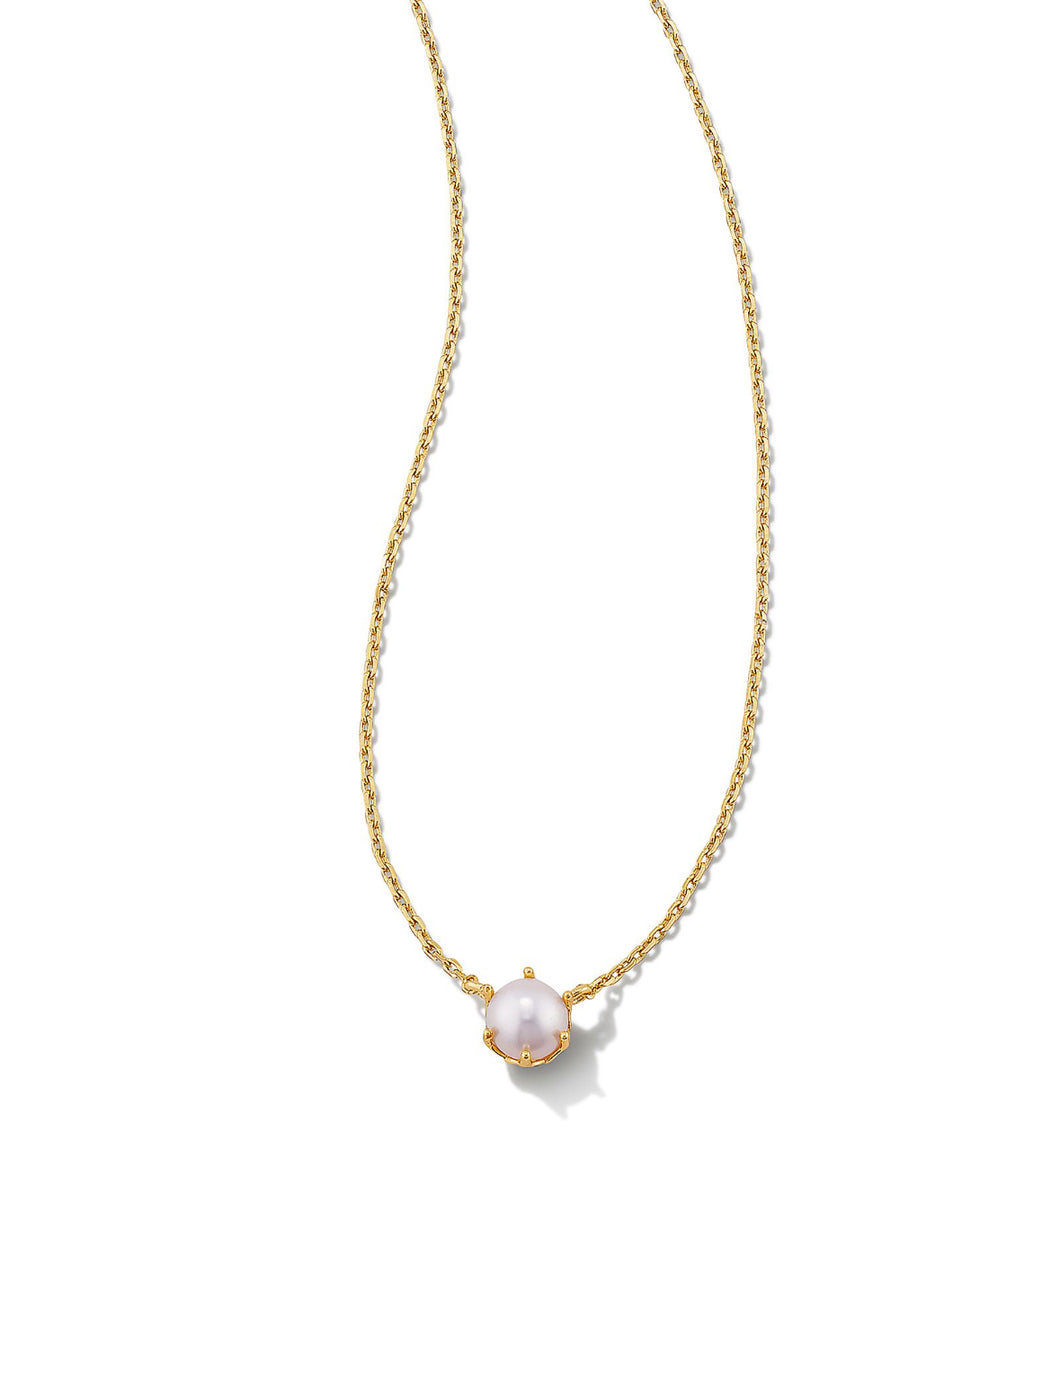 Kendra Scott: Ashton Necklace in Gold White Pearl